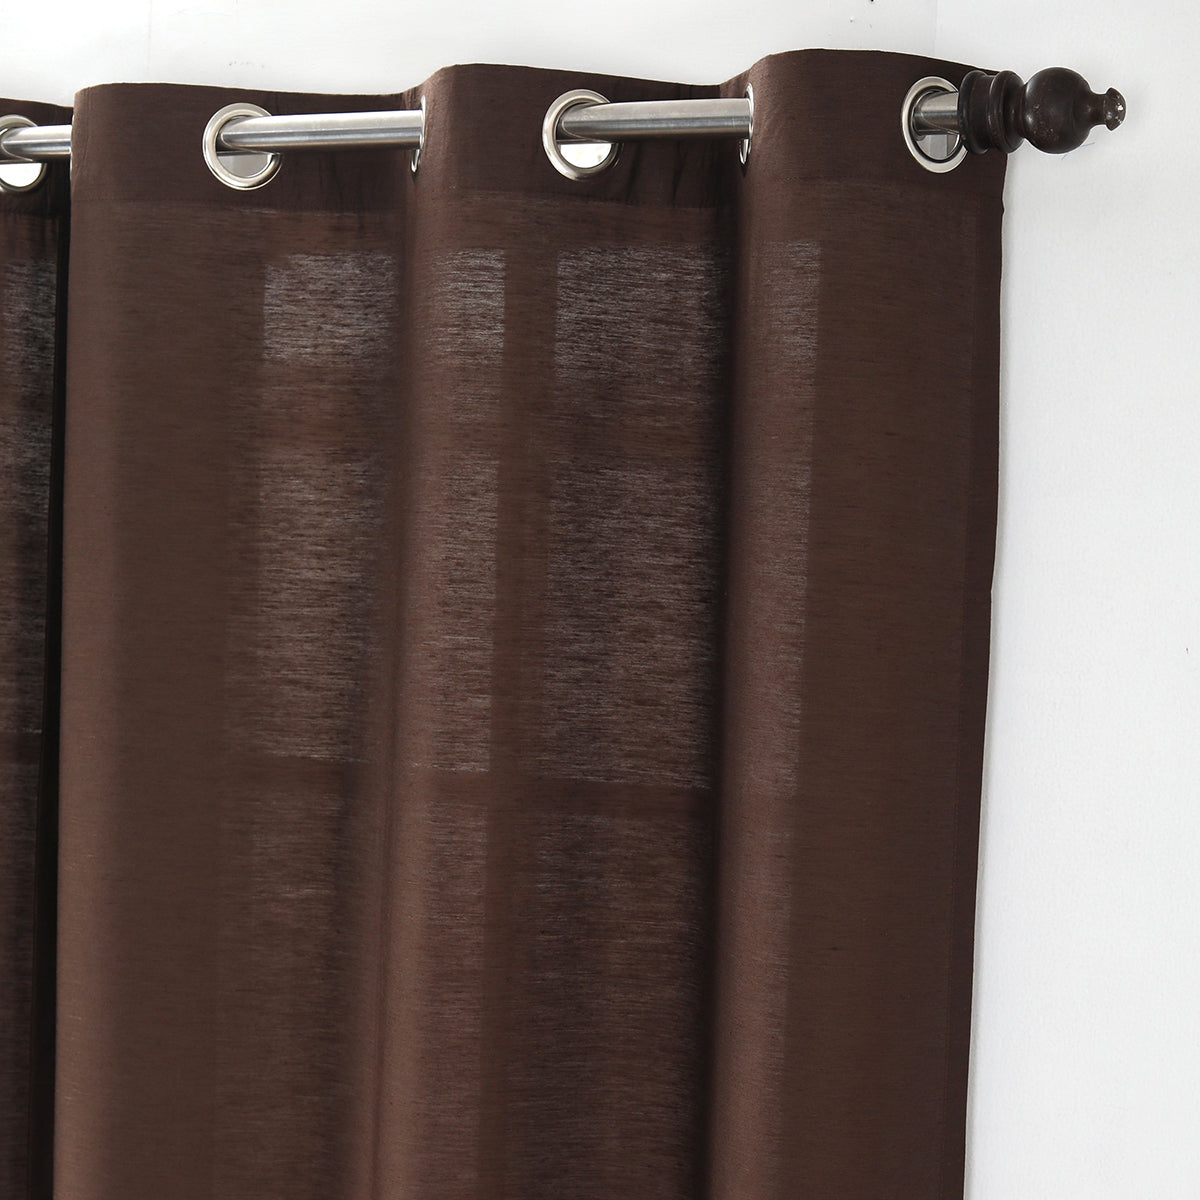 Tussah Silk Solid 2PC Brown Curtain Set